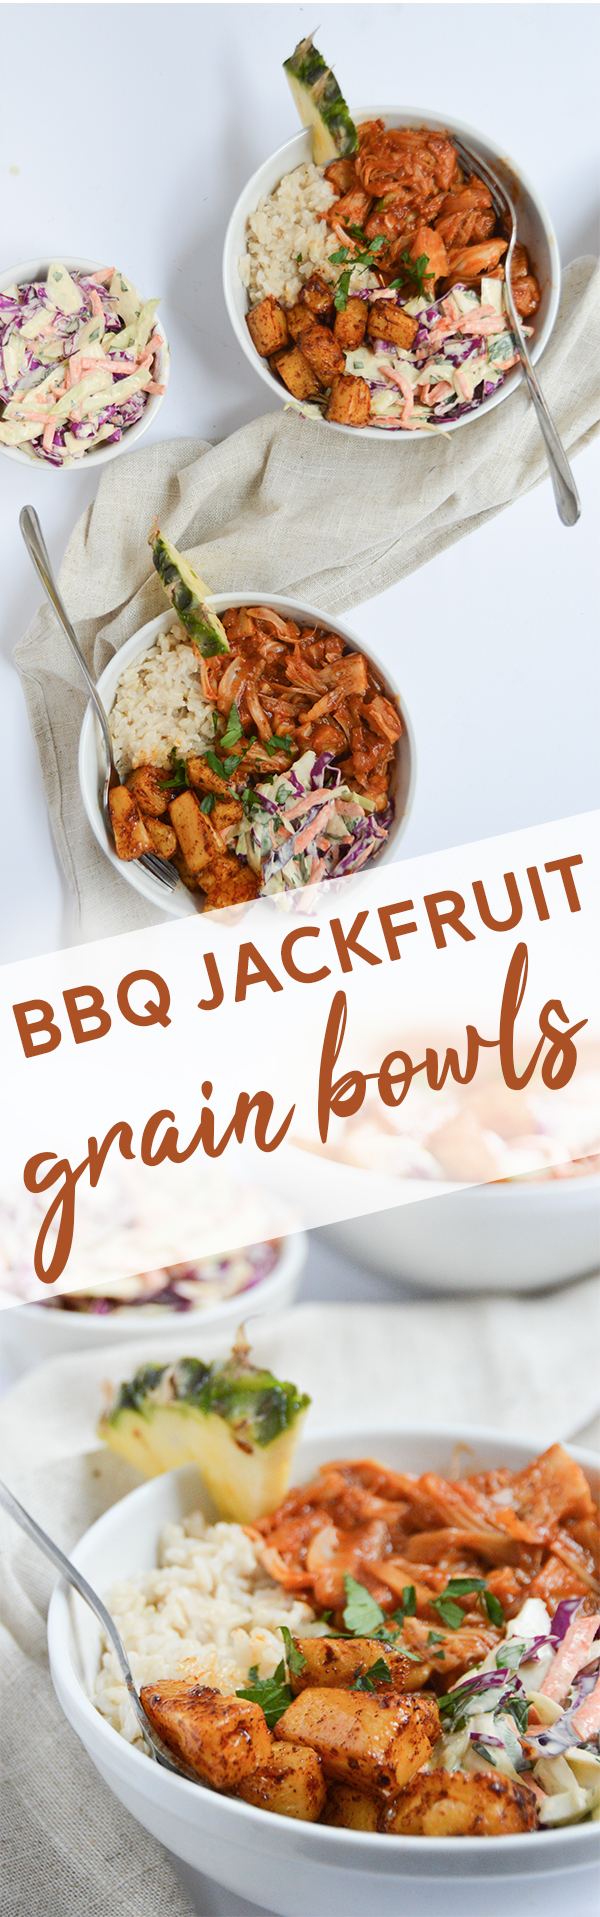 BBQ Jackfruit Grain Bowls - shredded bbq jackfruit, coleslaw, pineapple and your favorite grain make this vegan bowl a flavor-packed favorite. #vegan #plantbased #bbq https://pumpsandiron.com